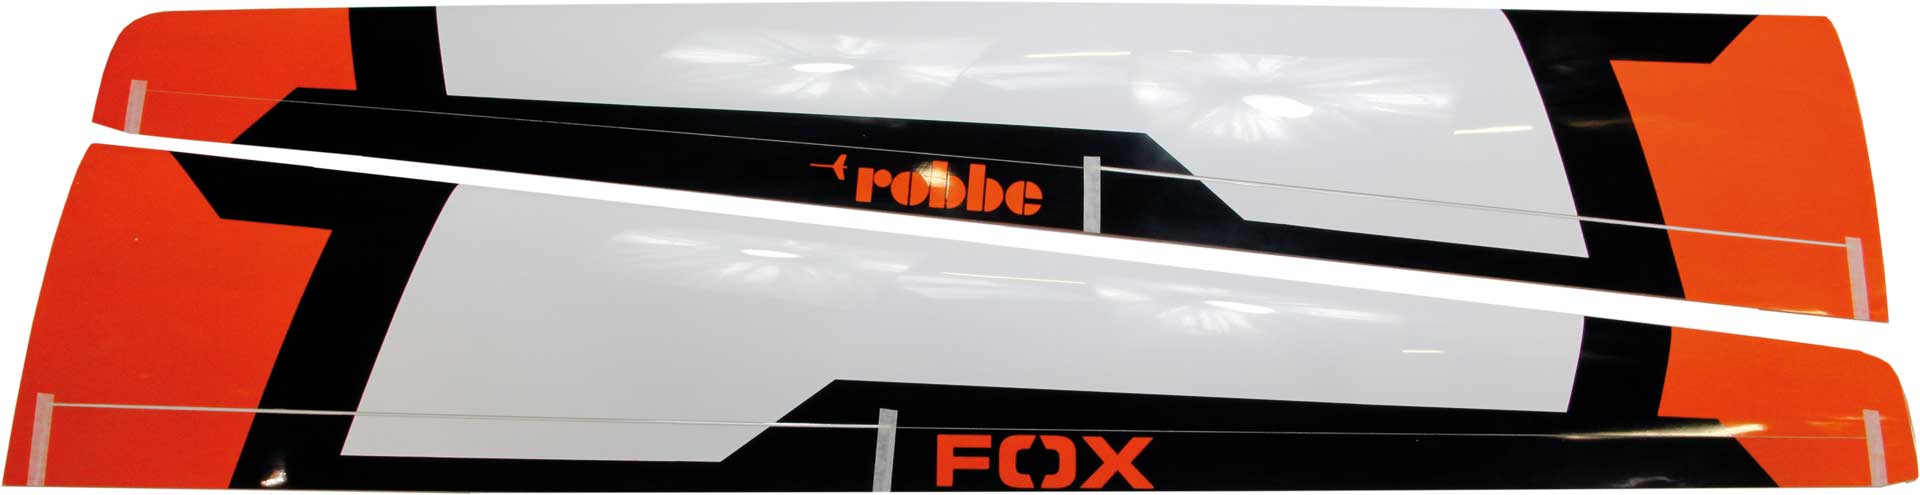 Robbe Modellsport wing set MDM-1 FOX 3,5m ARF painted orange without servos